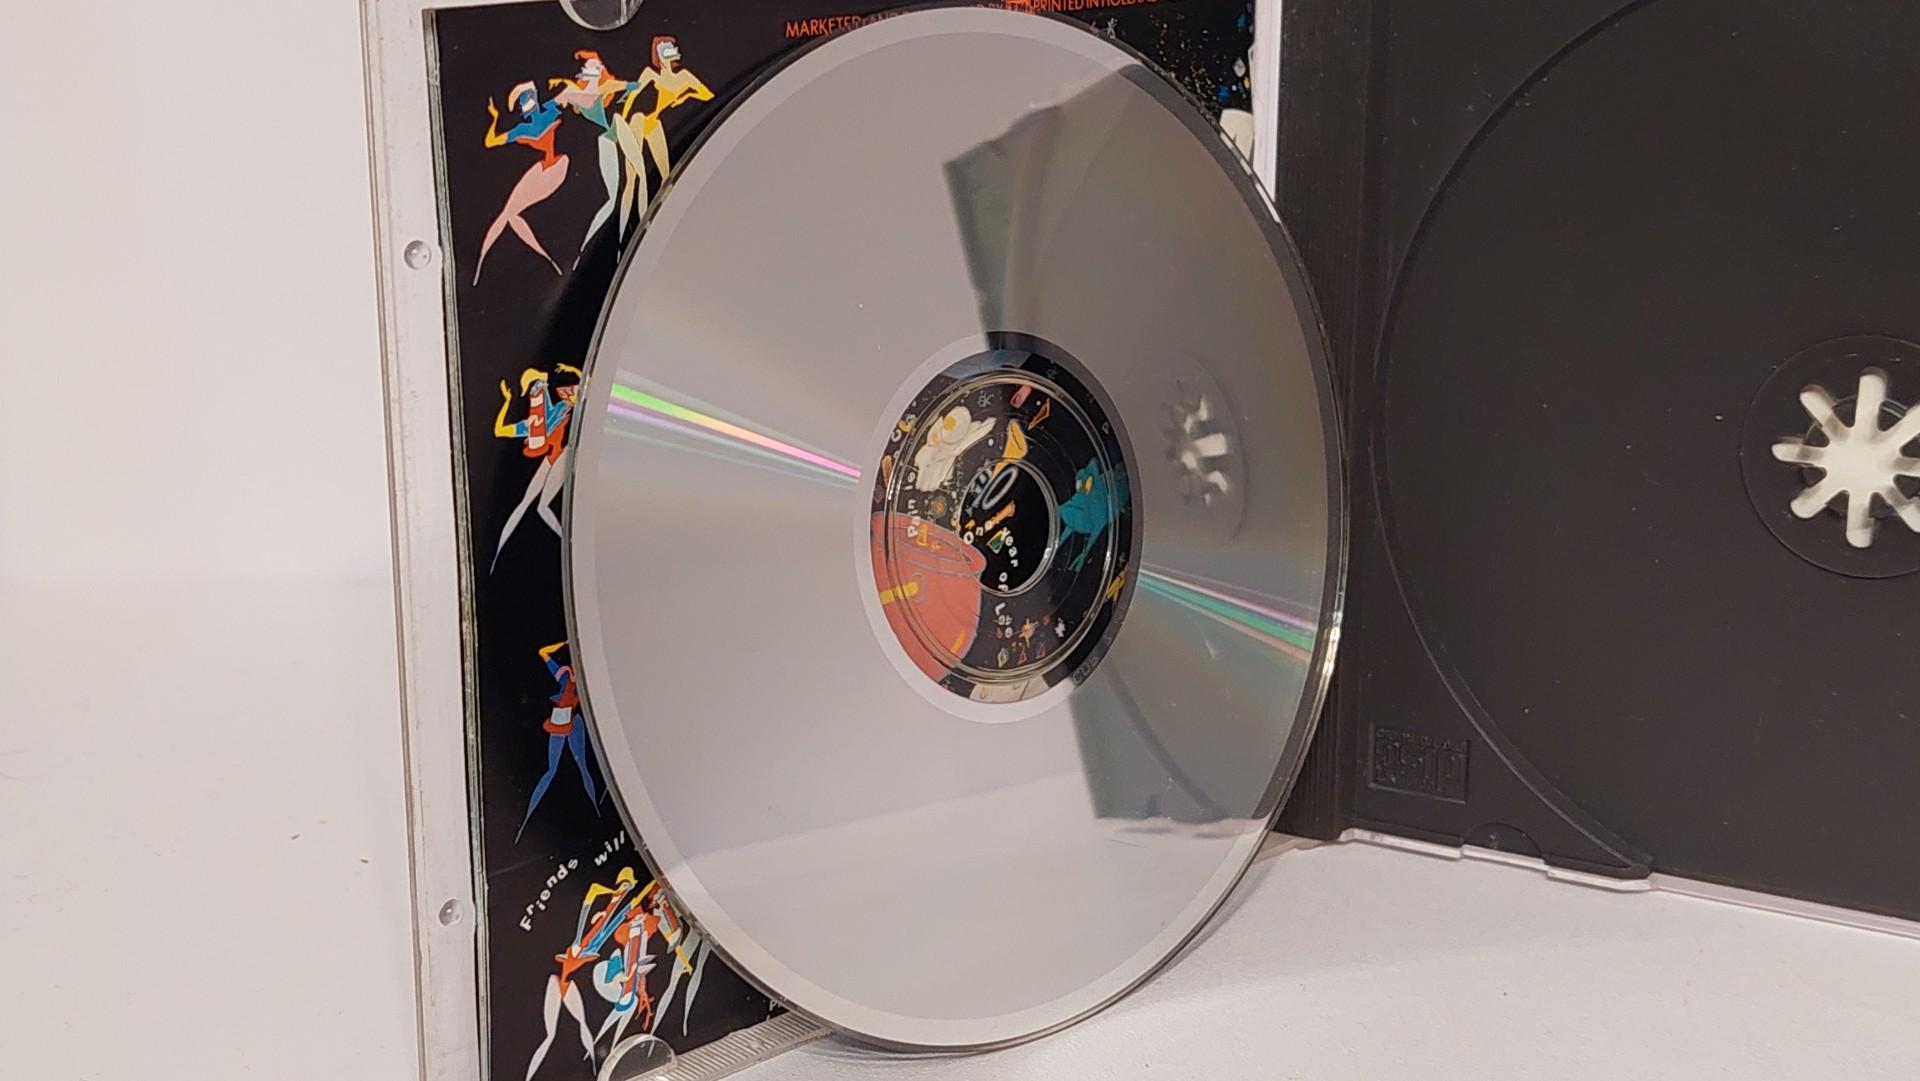 Originalus audio CD Queen – A Kind Of Magic